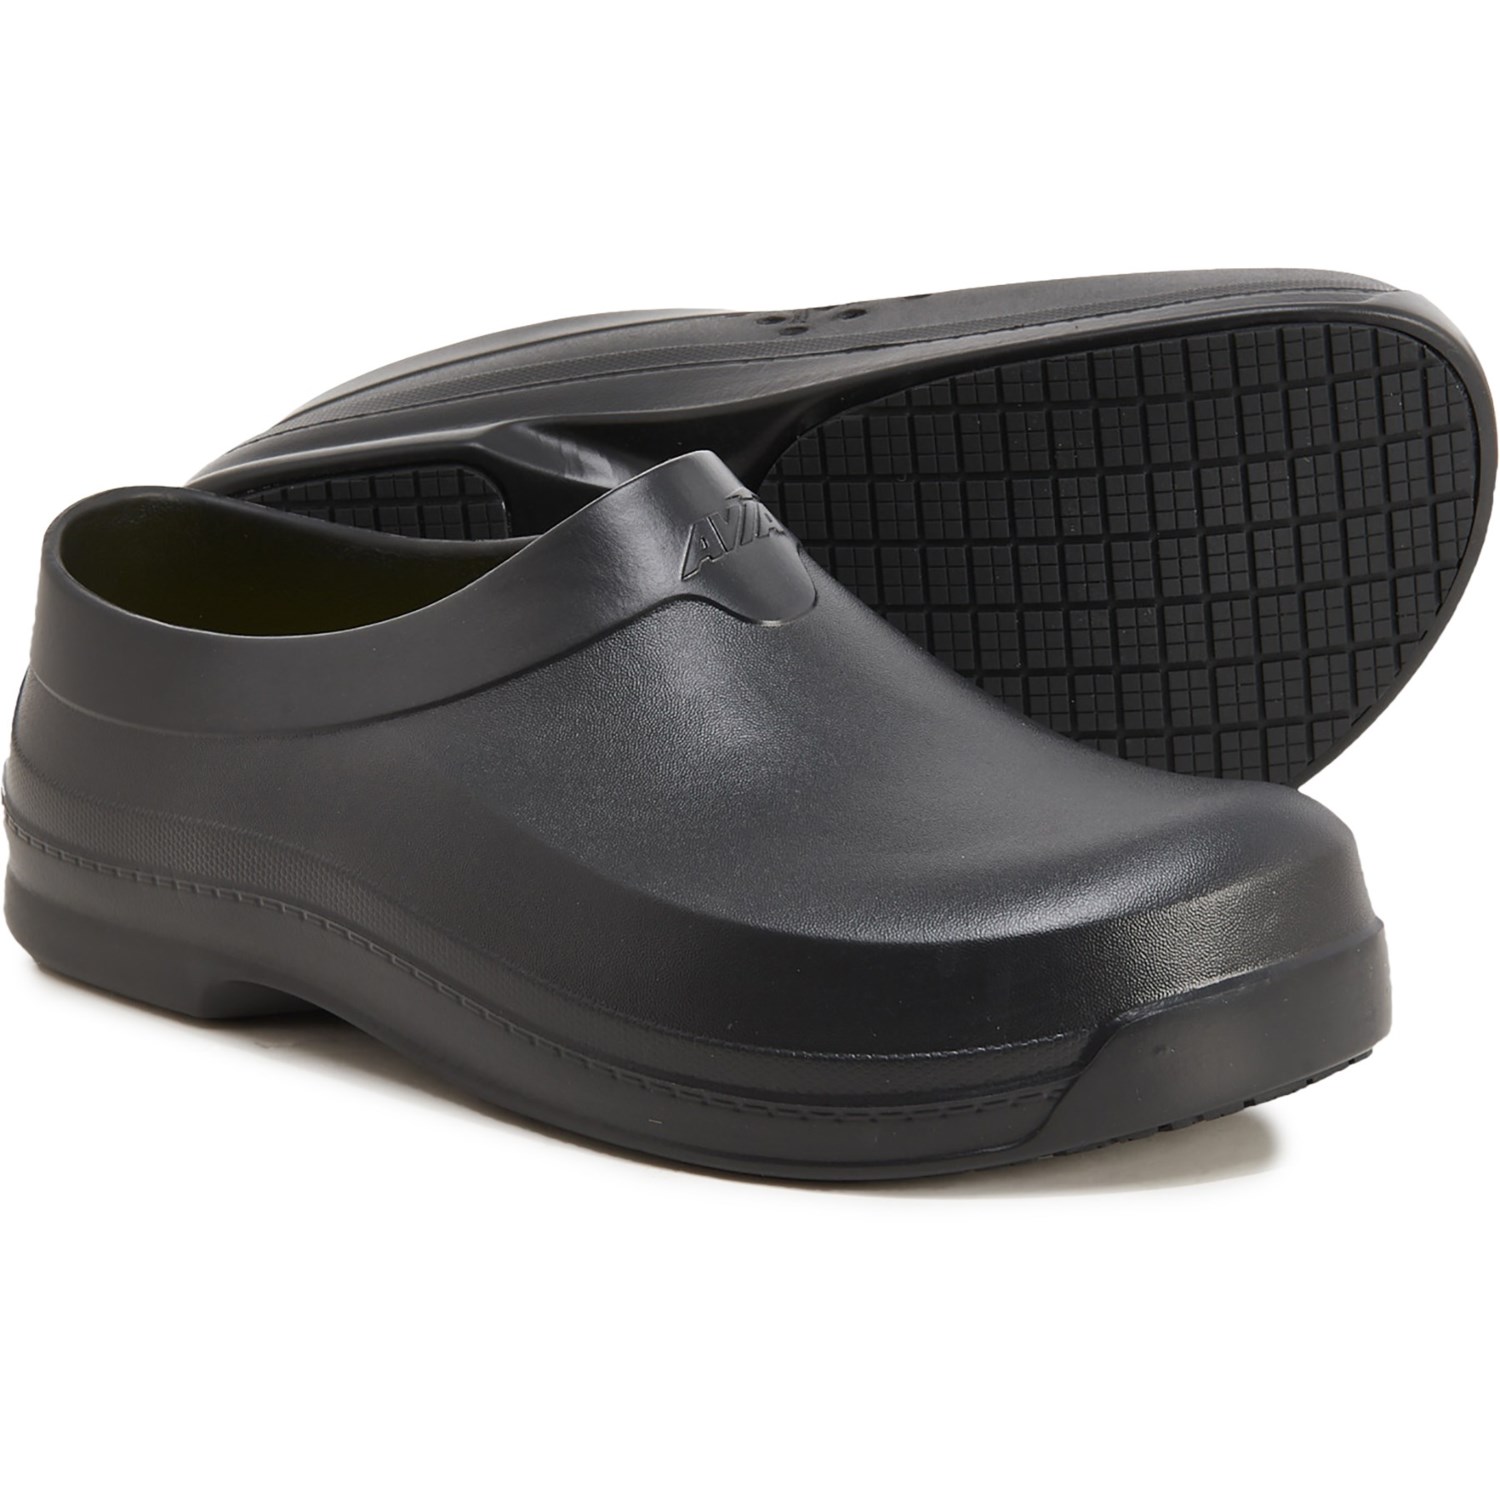 avia slip resistant shoes